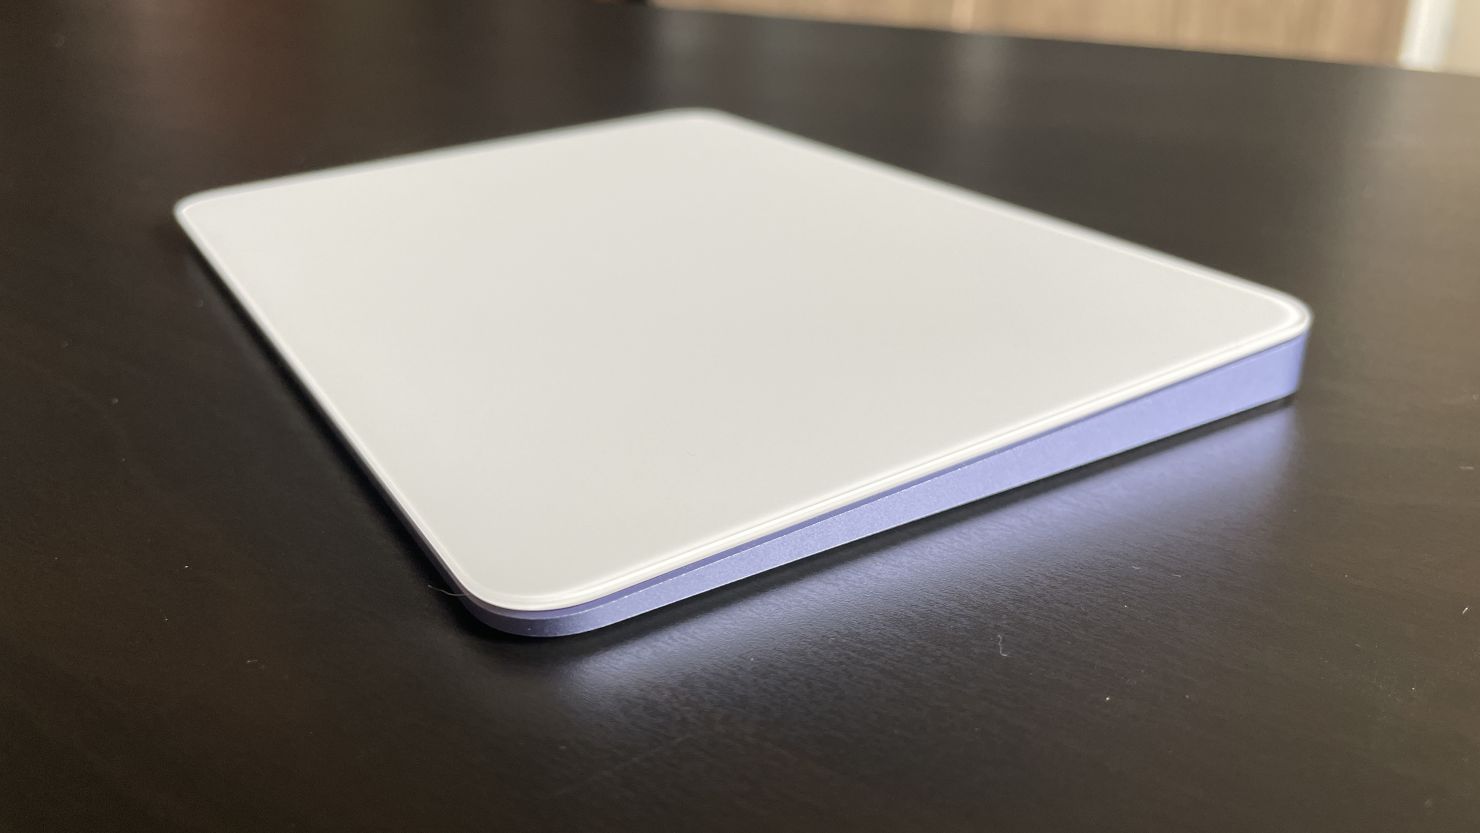  Apple Magic Trackpad Compatible with Apple Mac Desktop